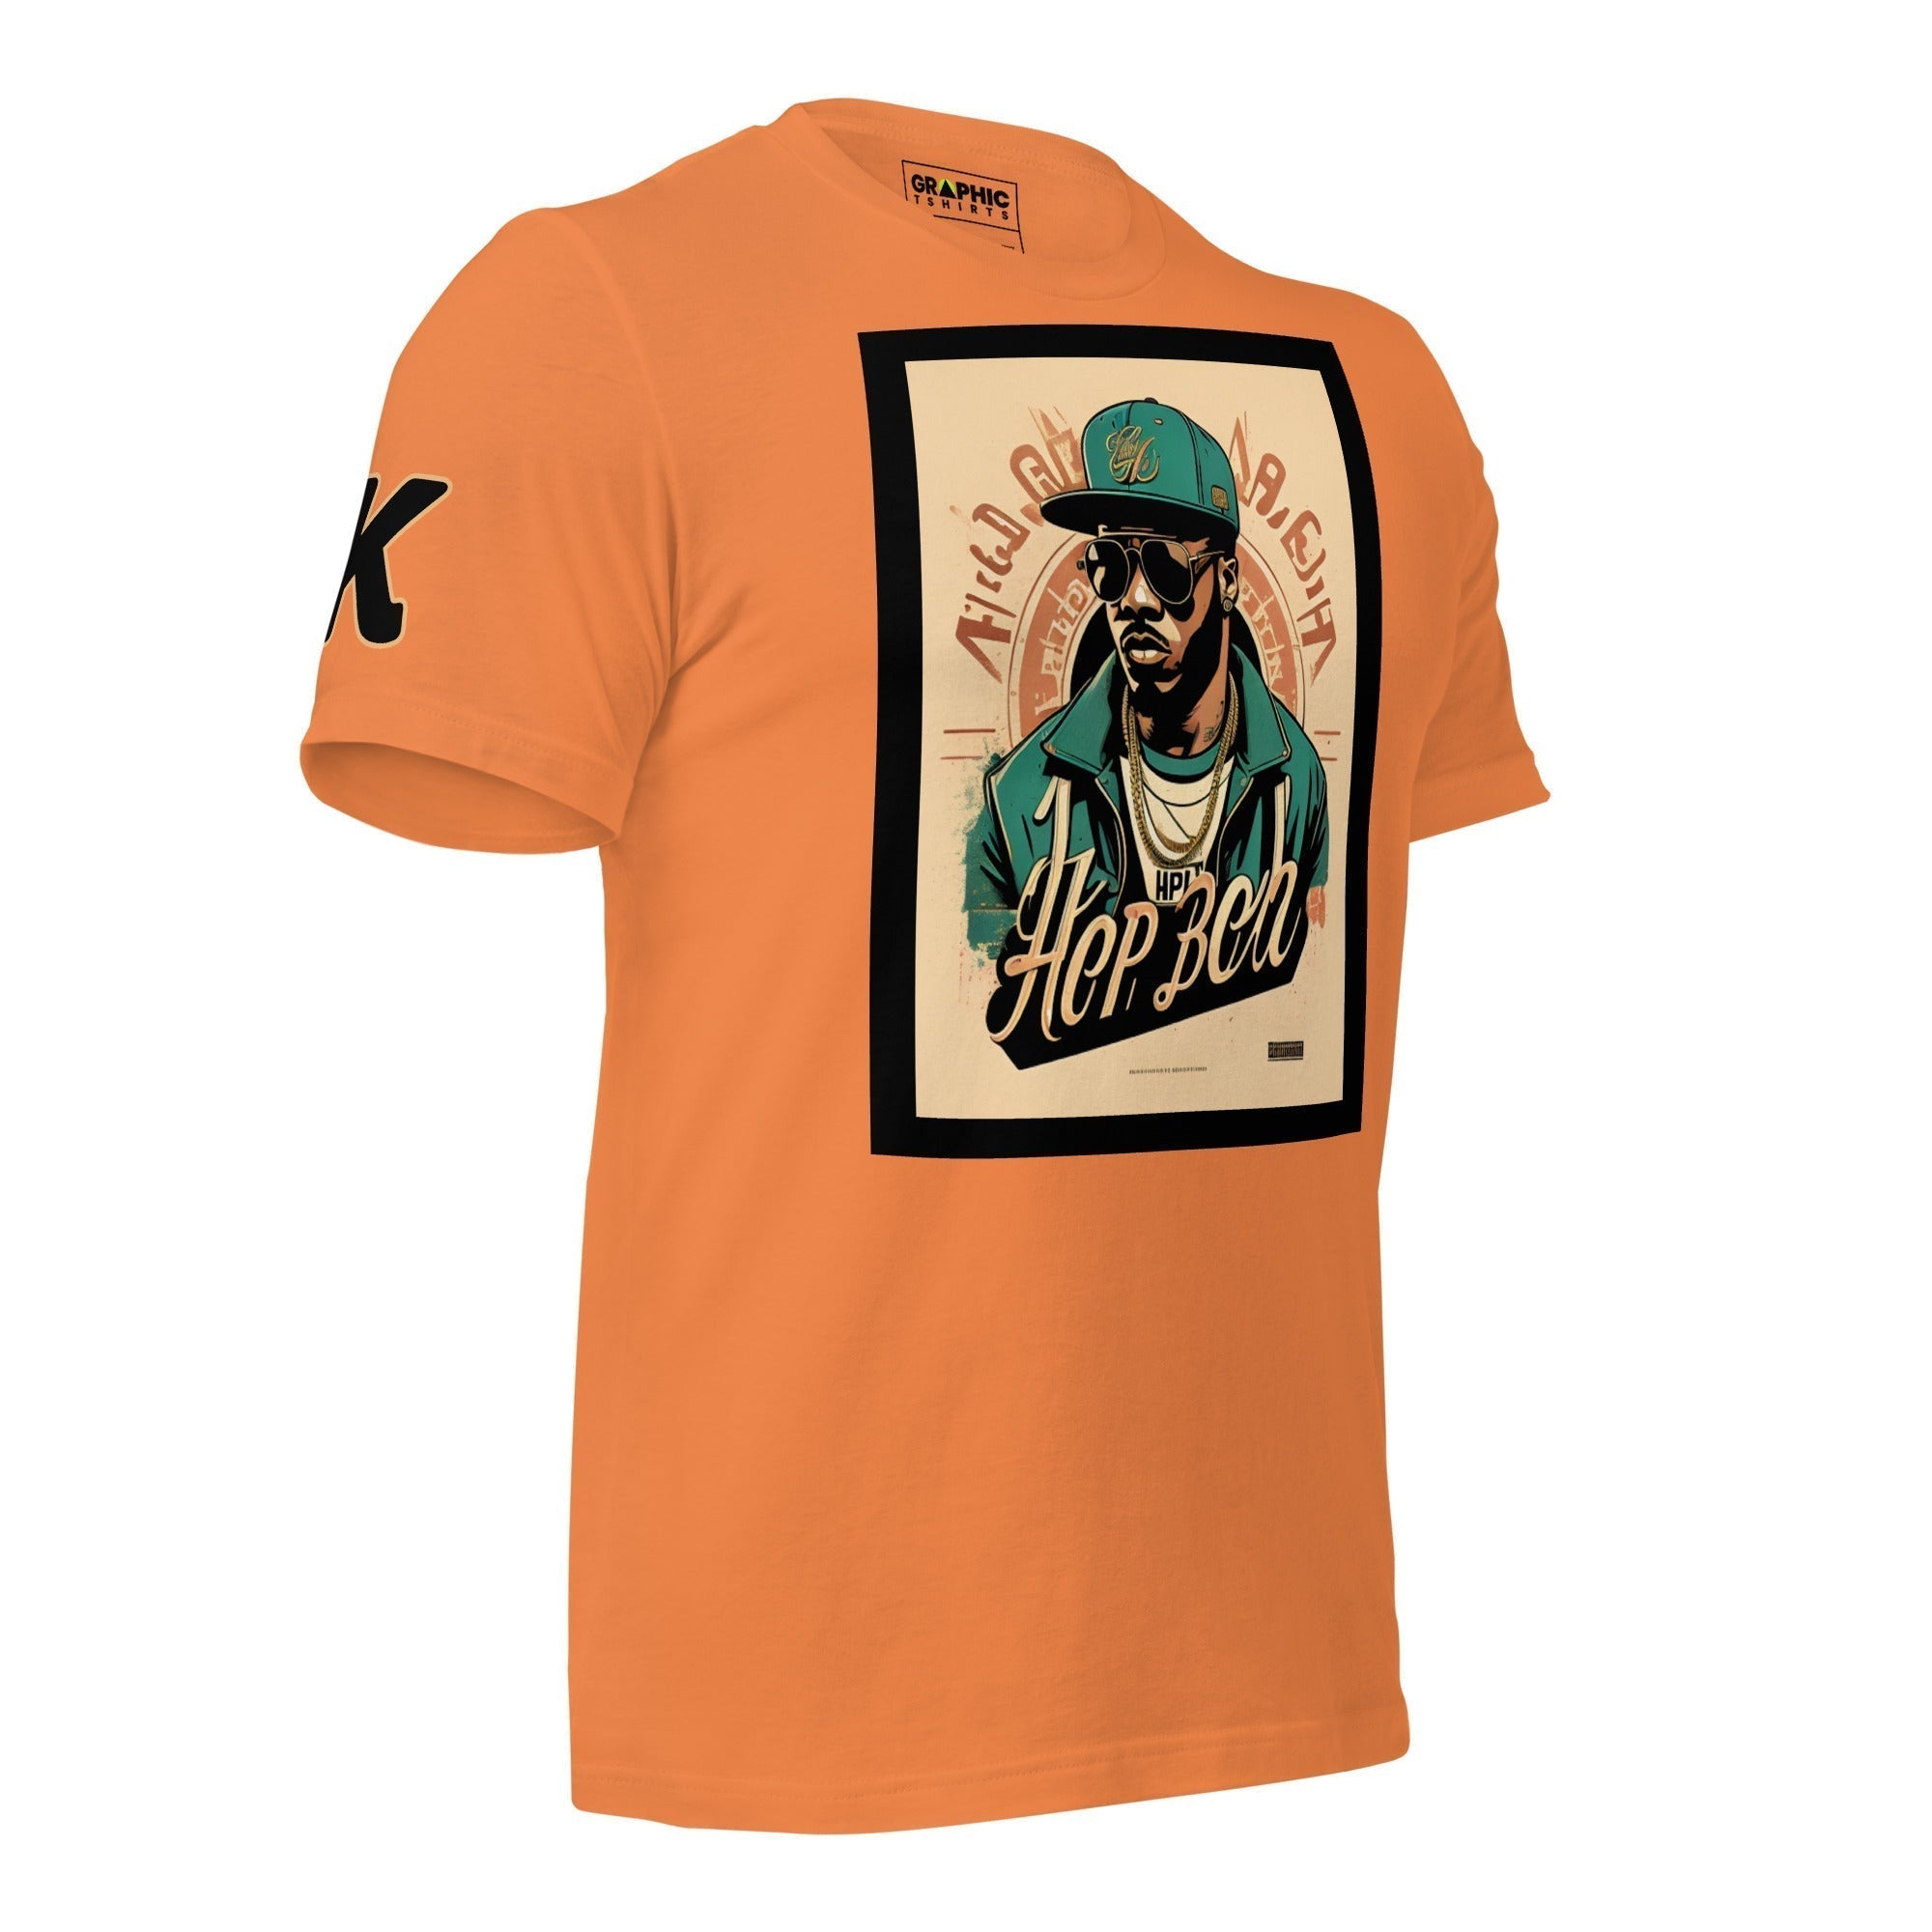 Unisex Crew Neck T-Shirt - Vintage Hip Hop Series v.6 - GRAPHIC T-SHIRTS